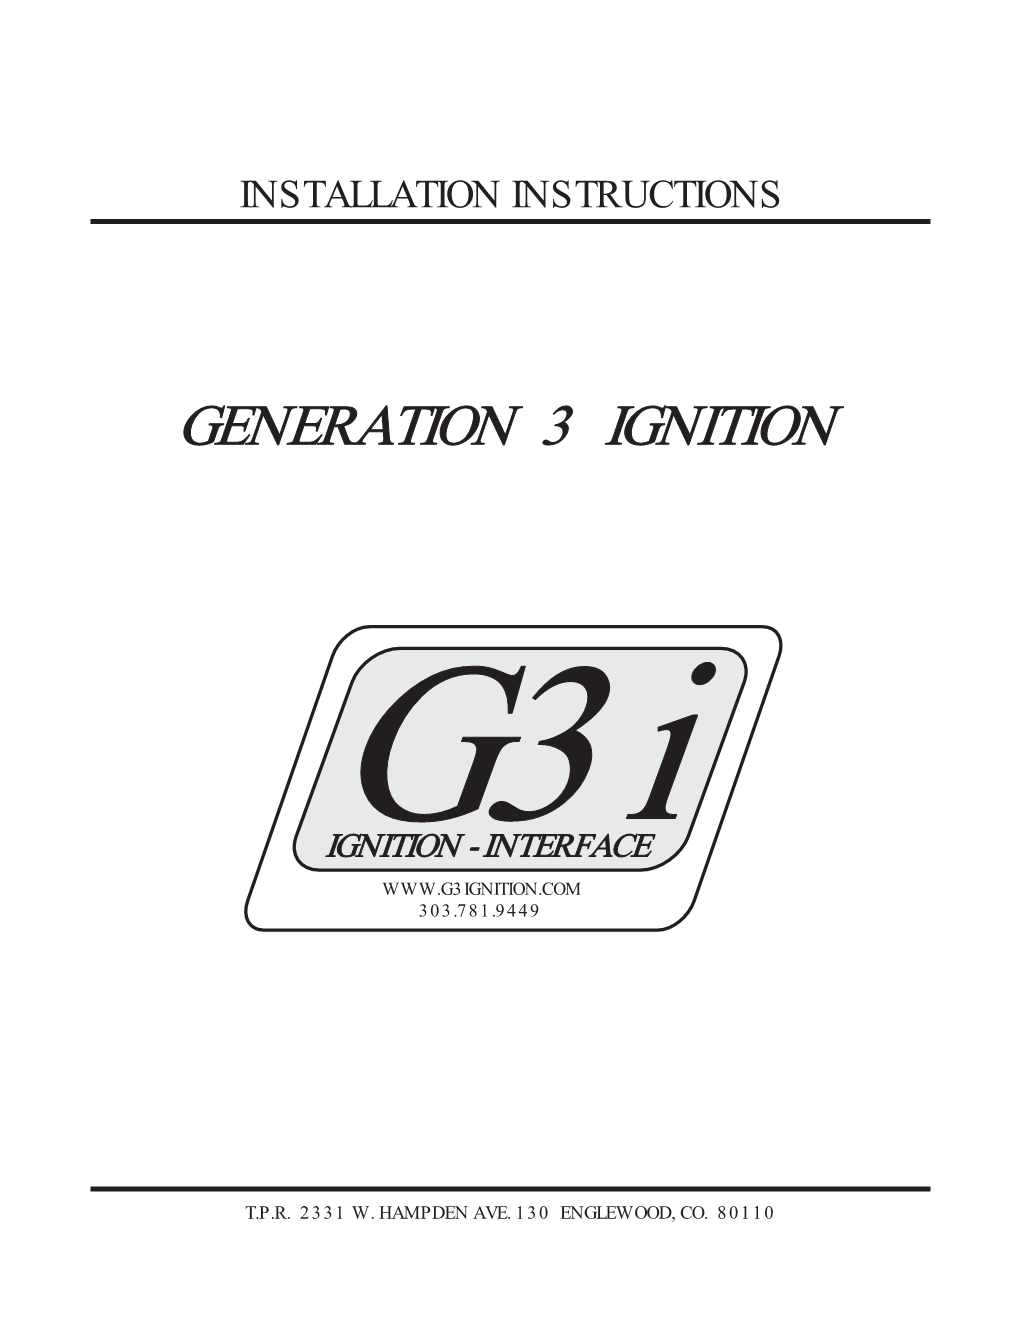 Generation 3 Ignition Magneto Modification